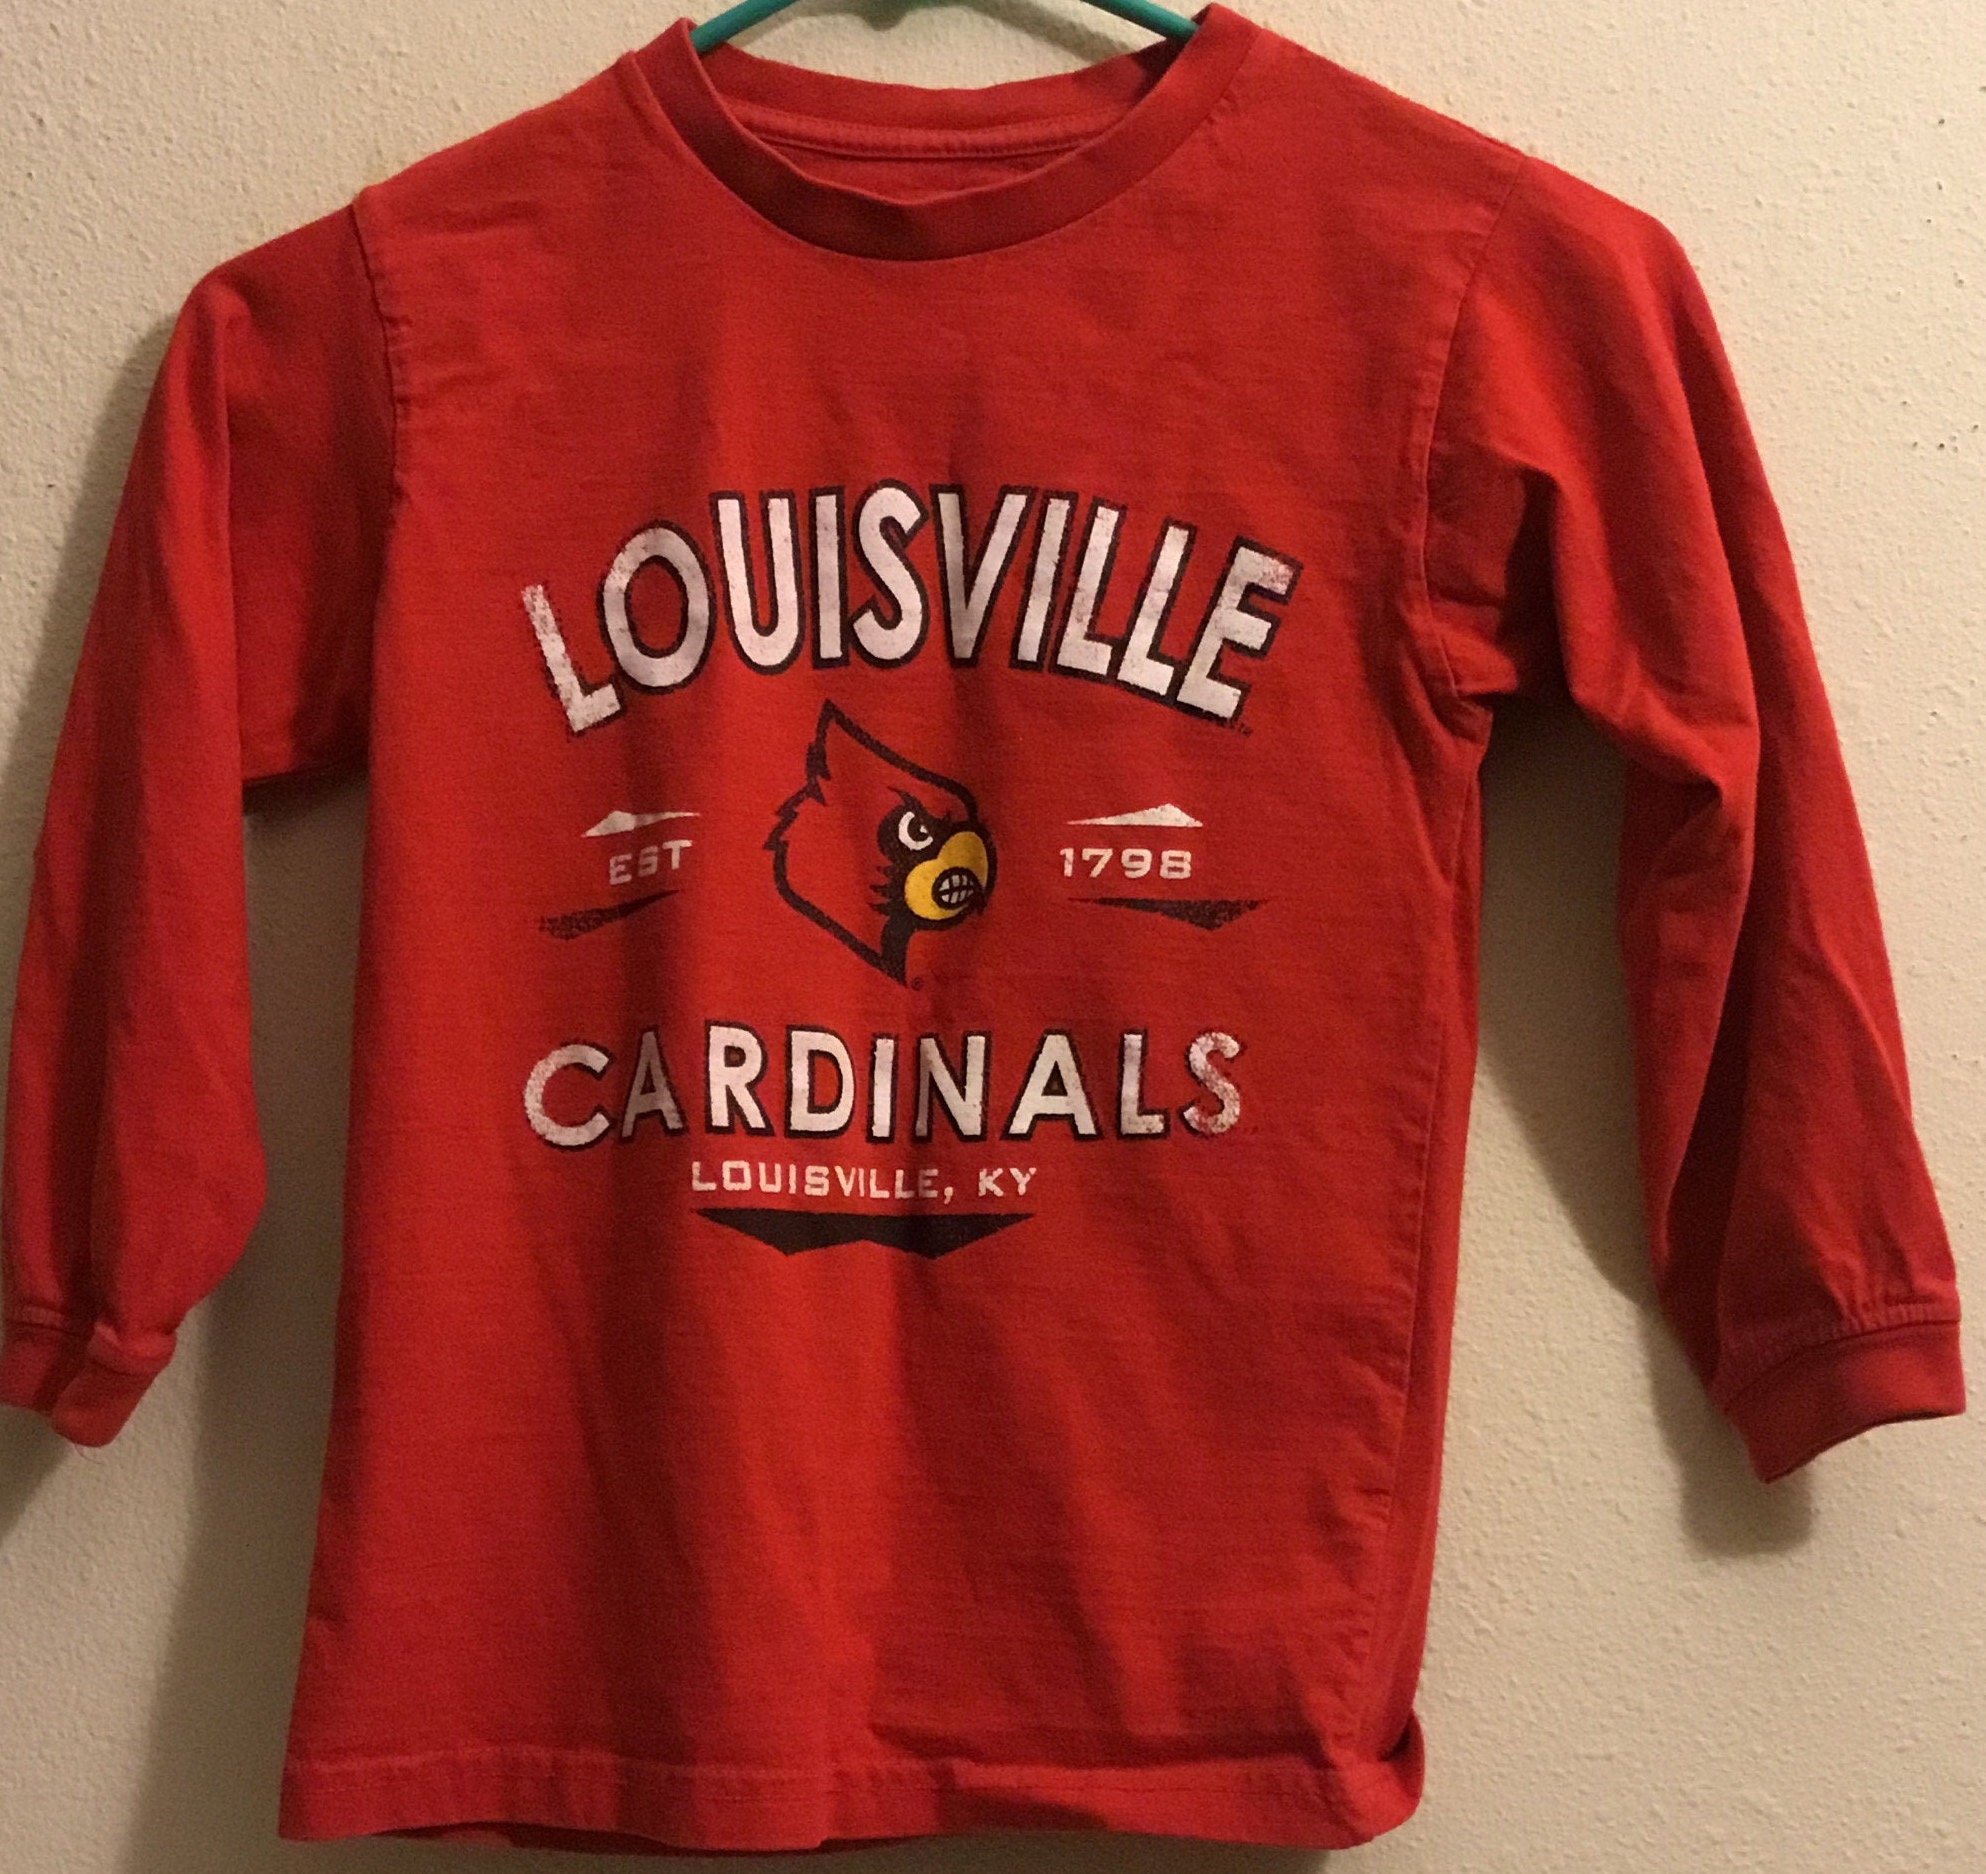 Louisville Cardinals Official NCAA Apparel Kids Youth Girls Size